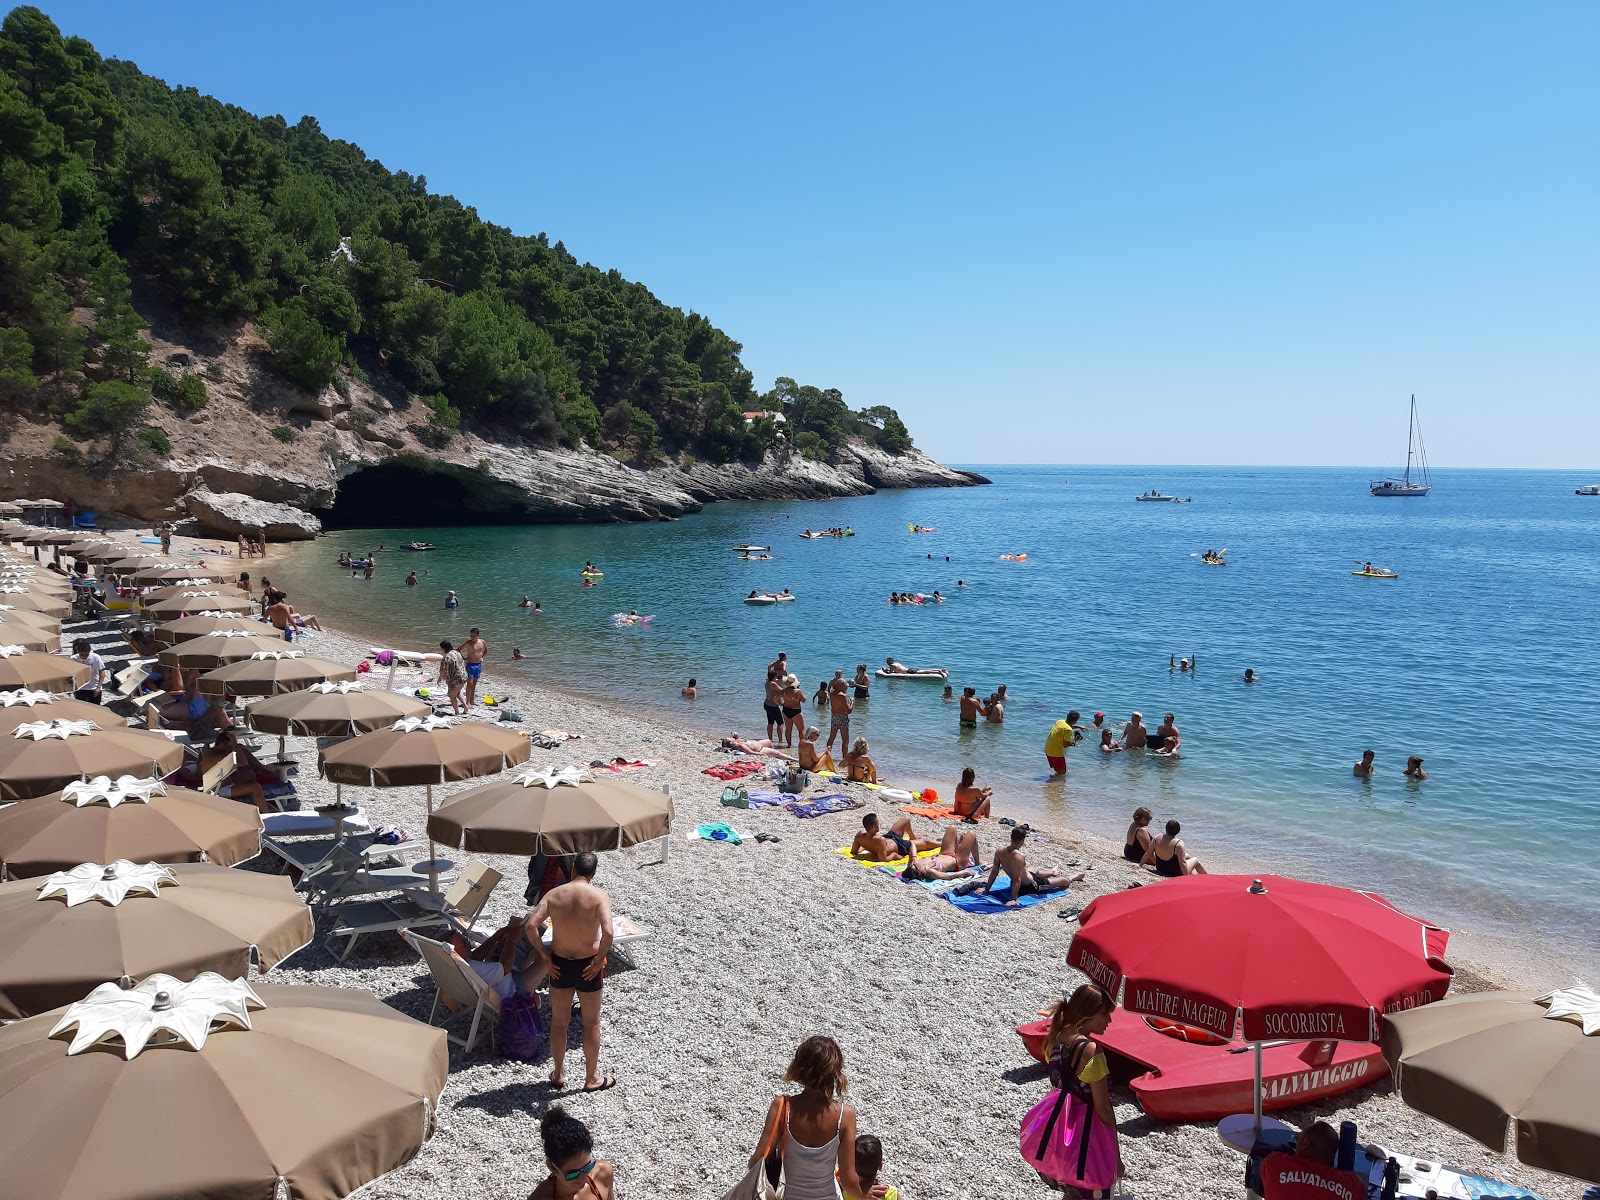 Foto van Spiaggia di Portopiatto met hoog niveau van netheid